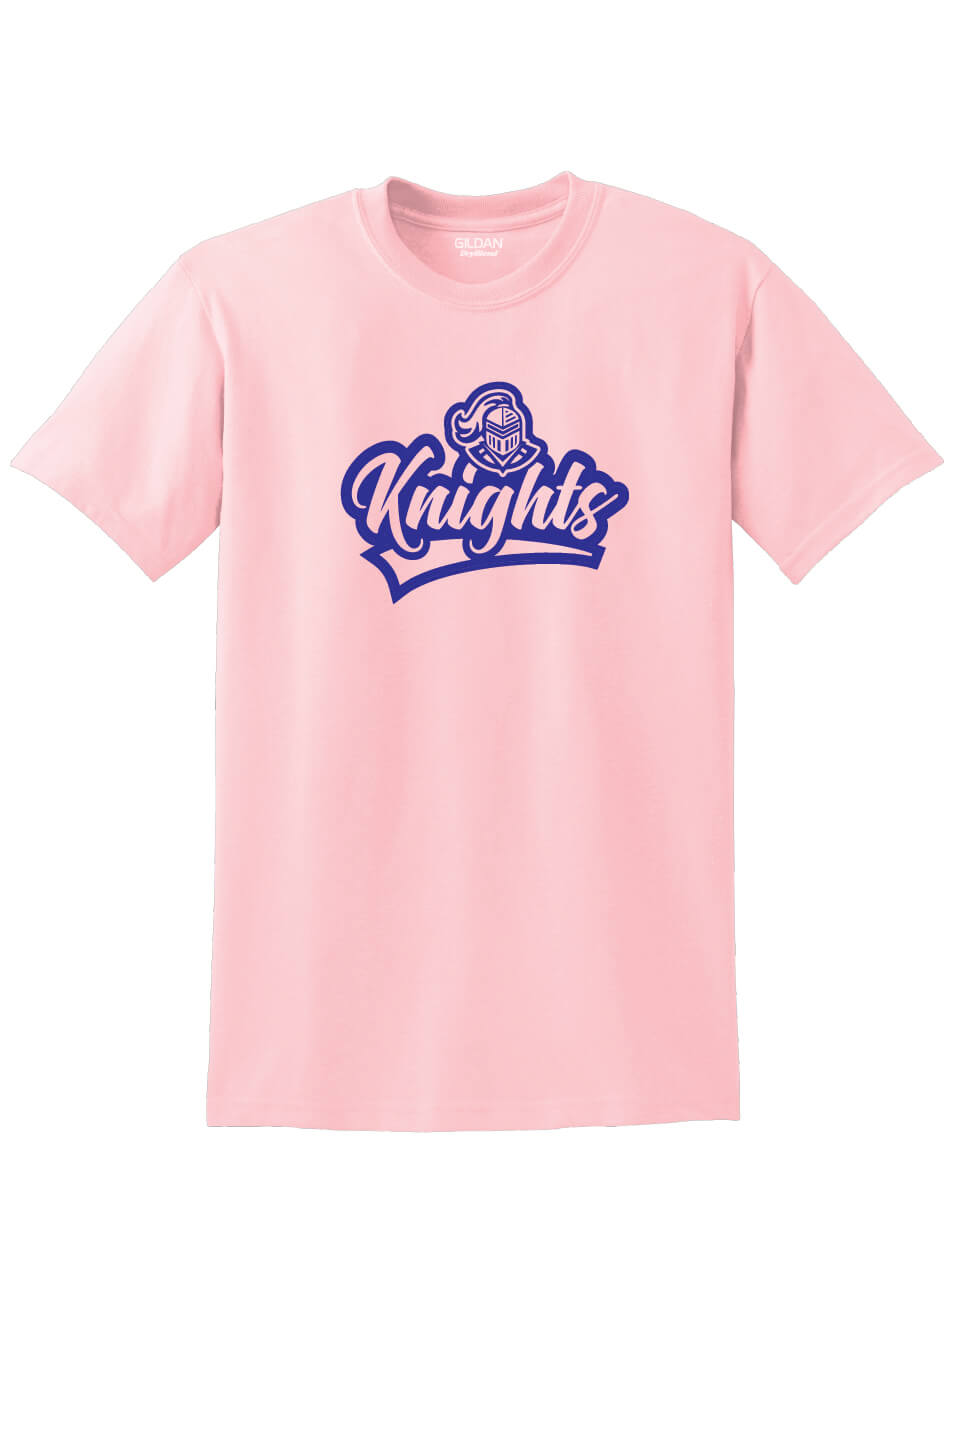 Knights Short Sleeve T-Shirt pink